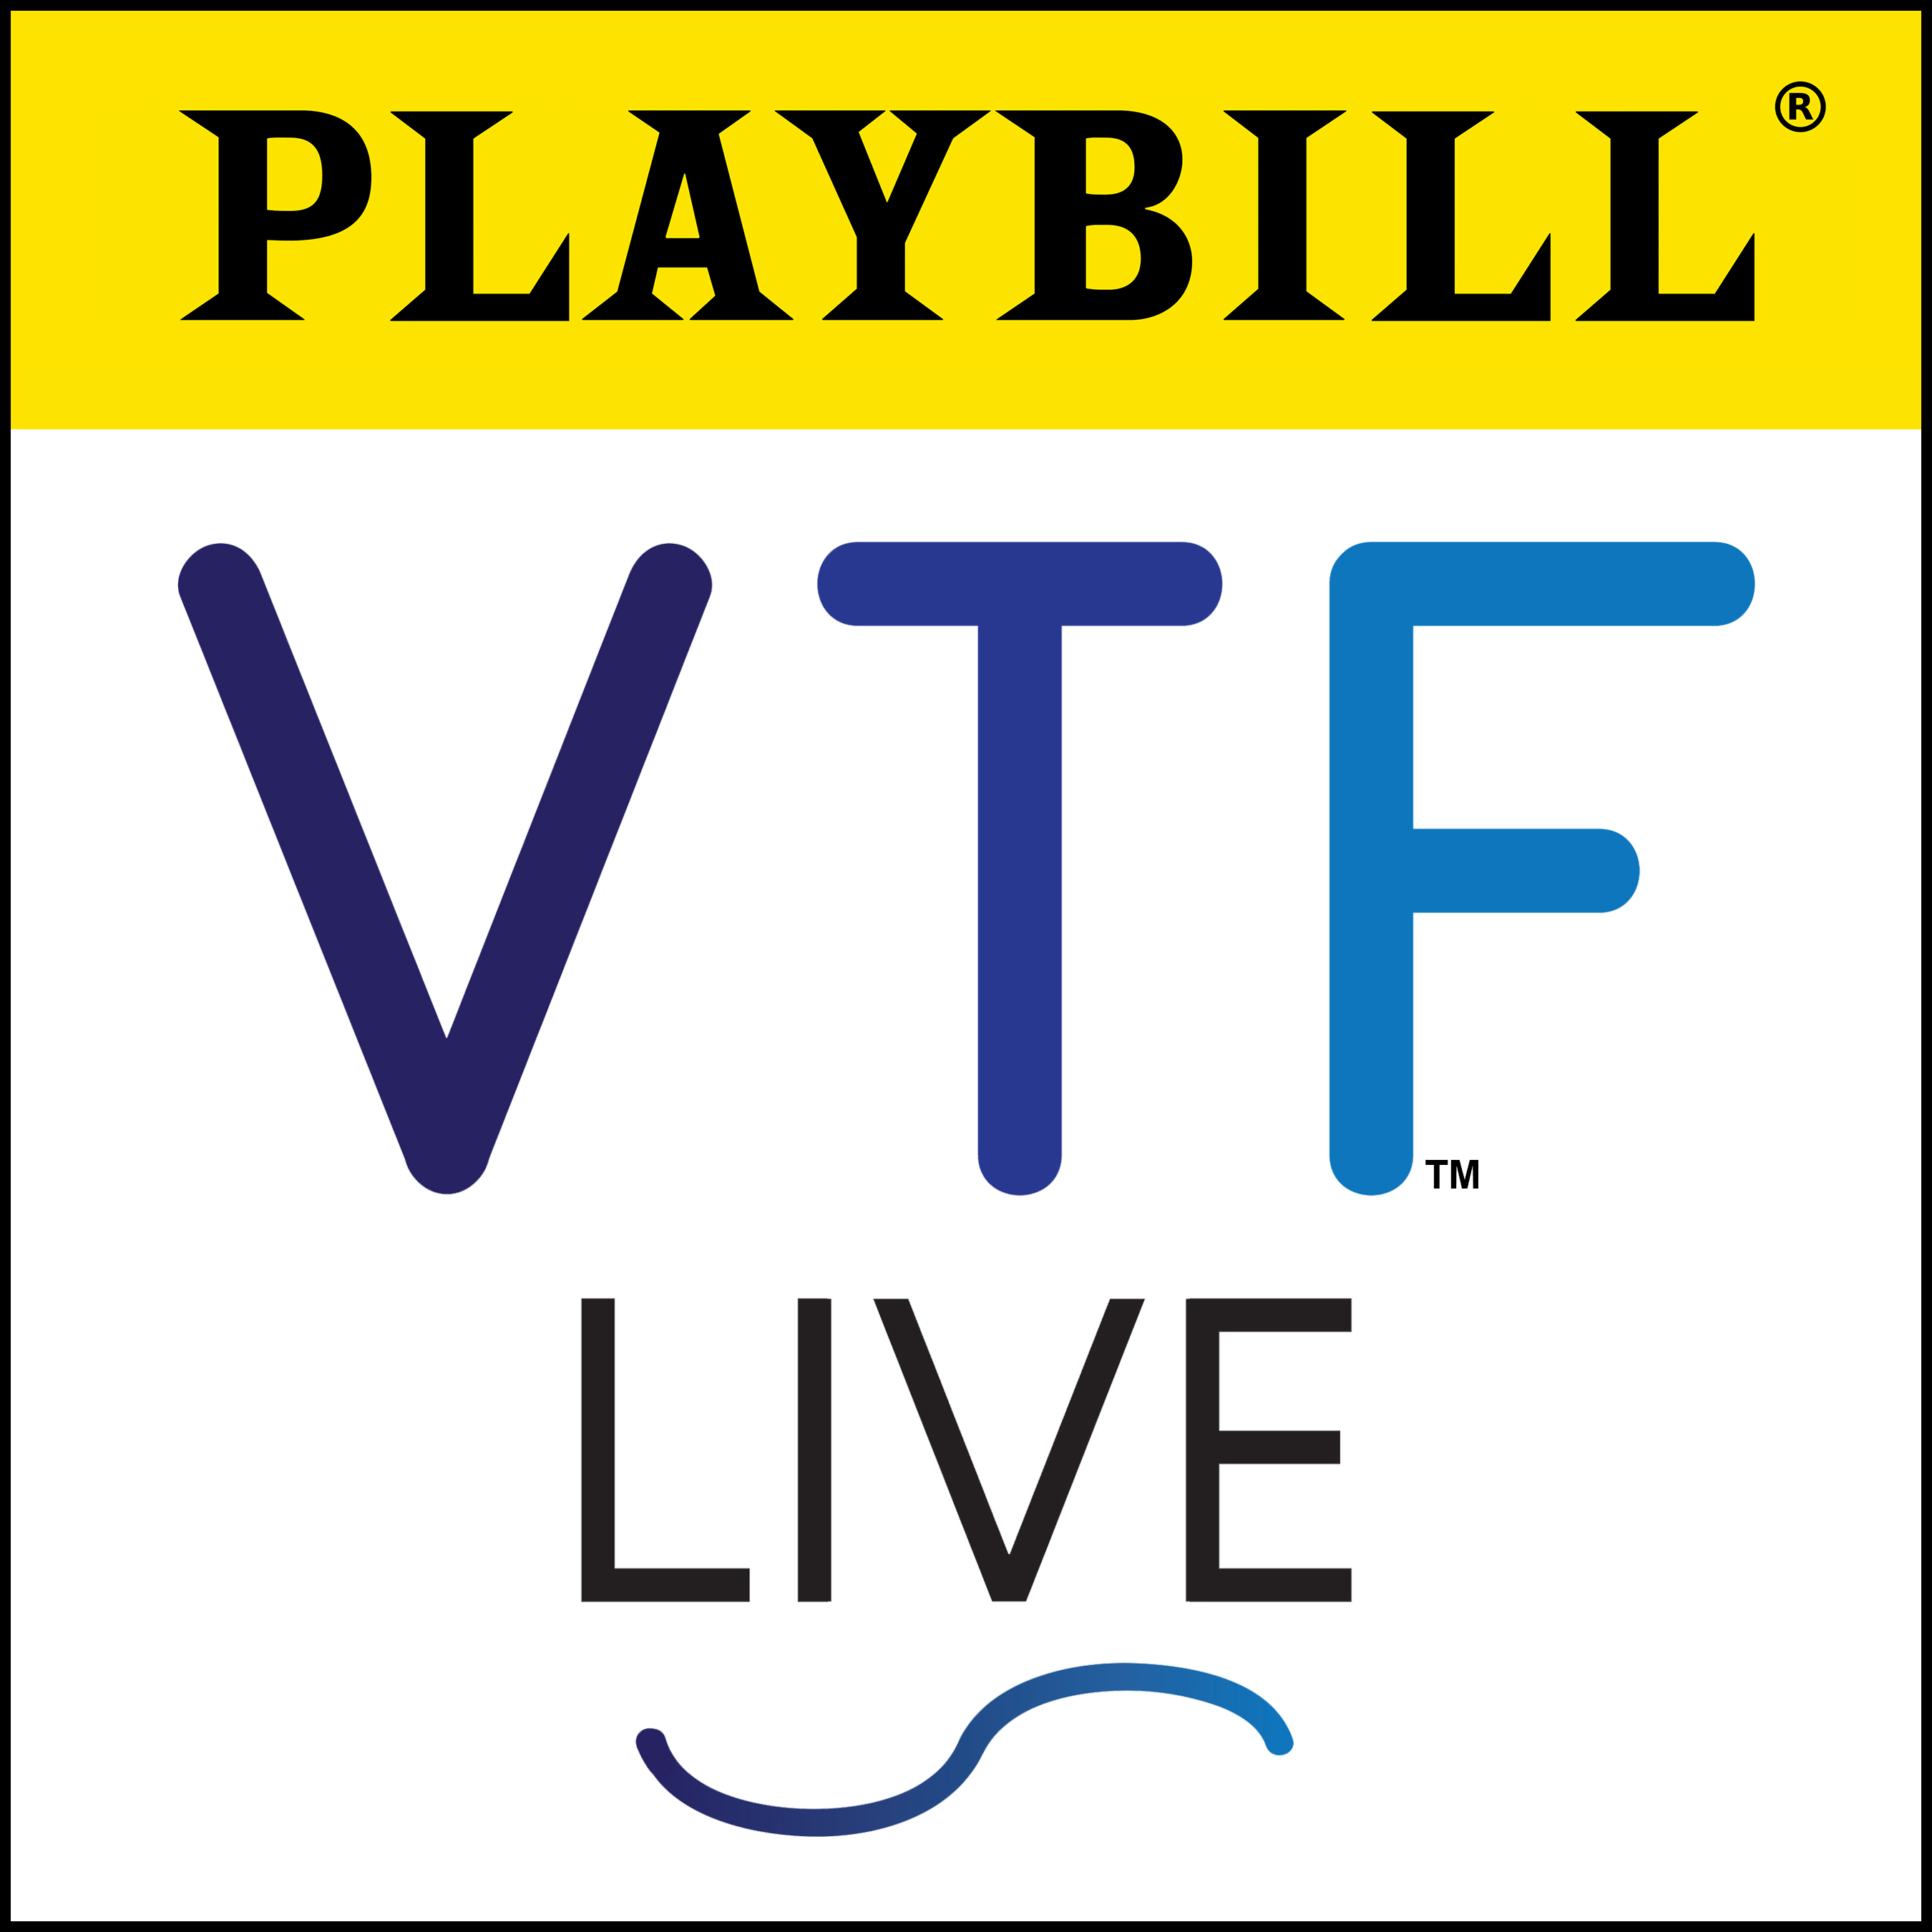 Playbill VTF Live Logo